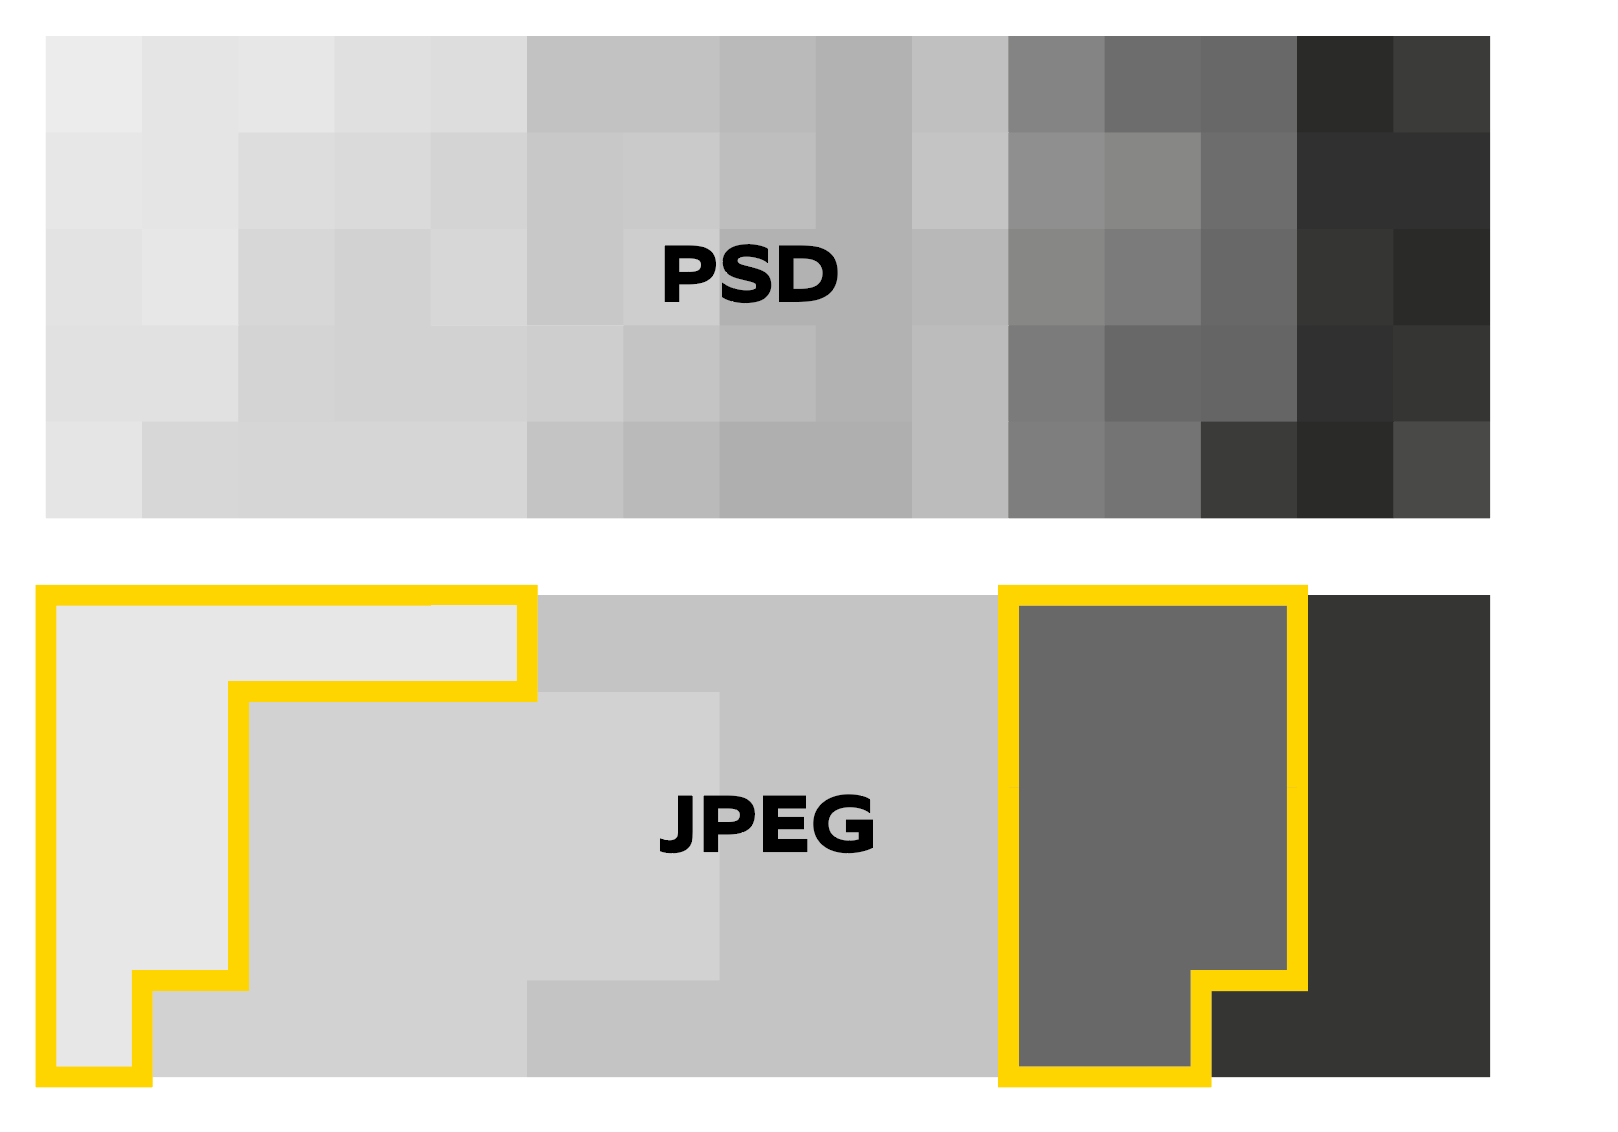 PSD vs JPEG